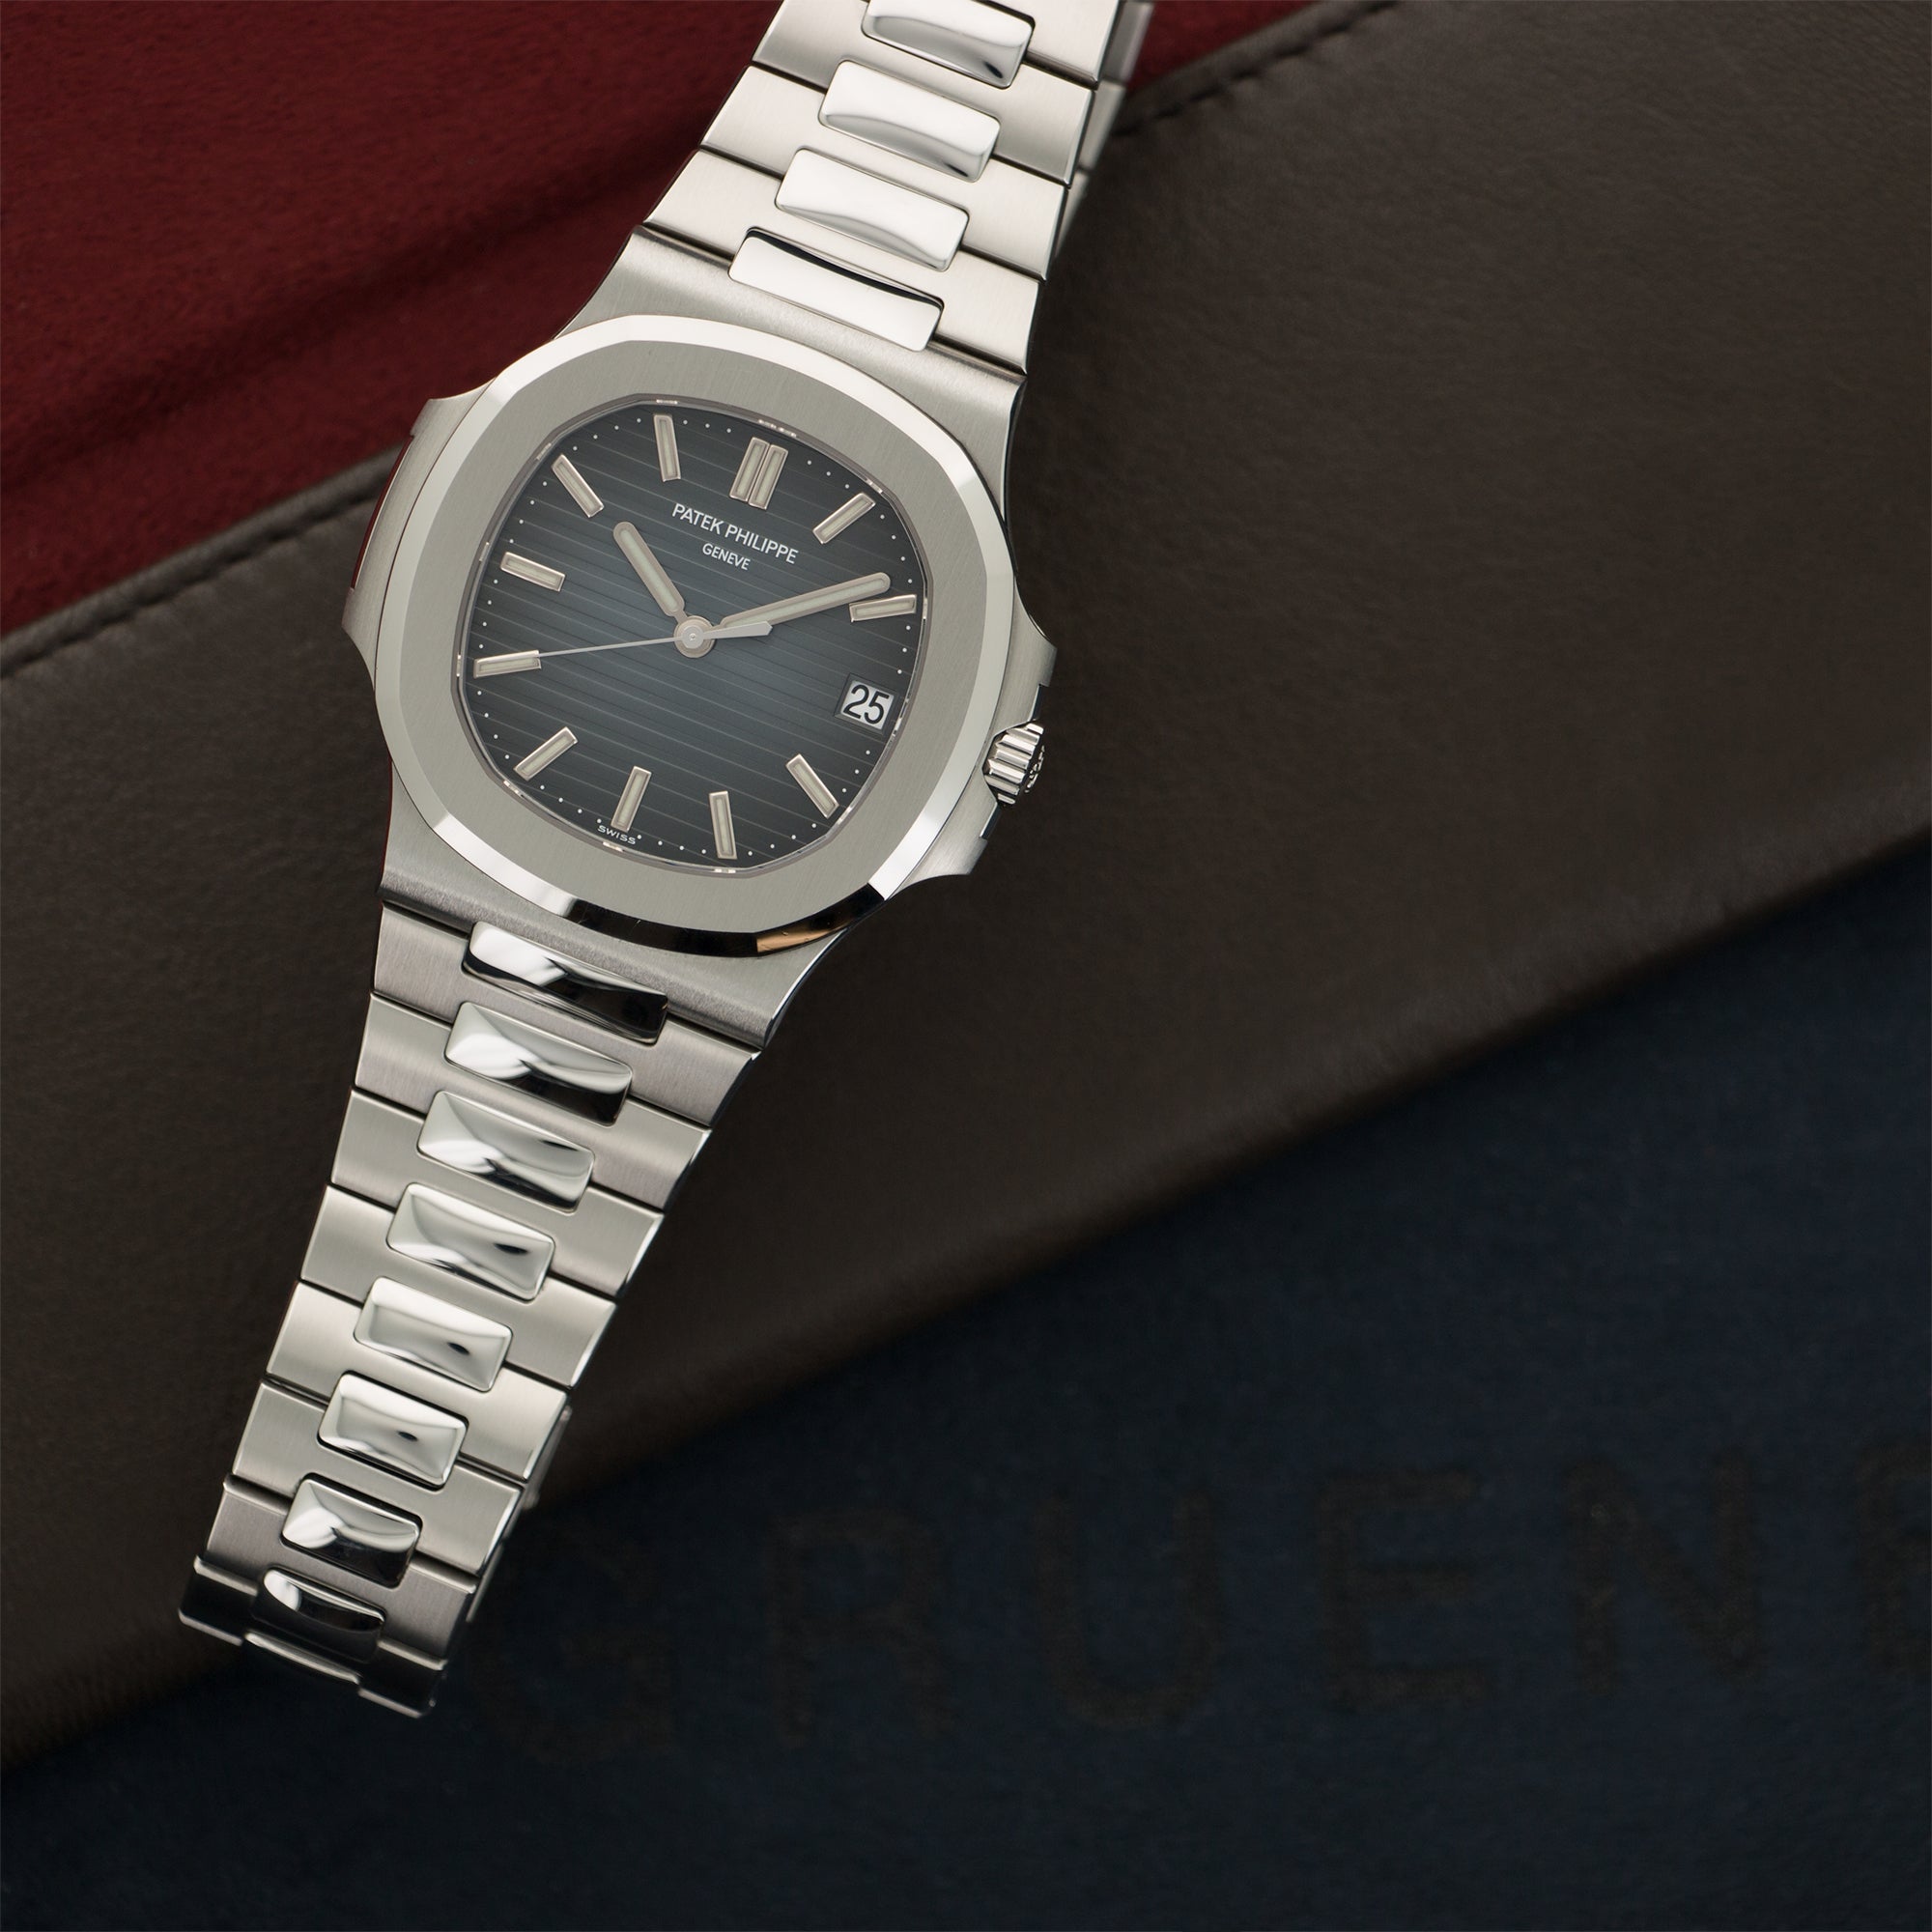 Patek Philippe - Patek Philippe Stainless Steel Nautilus Watch Ref. 5711/1a - The Keystone Watches